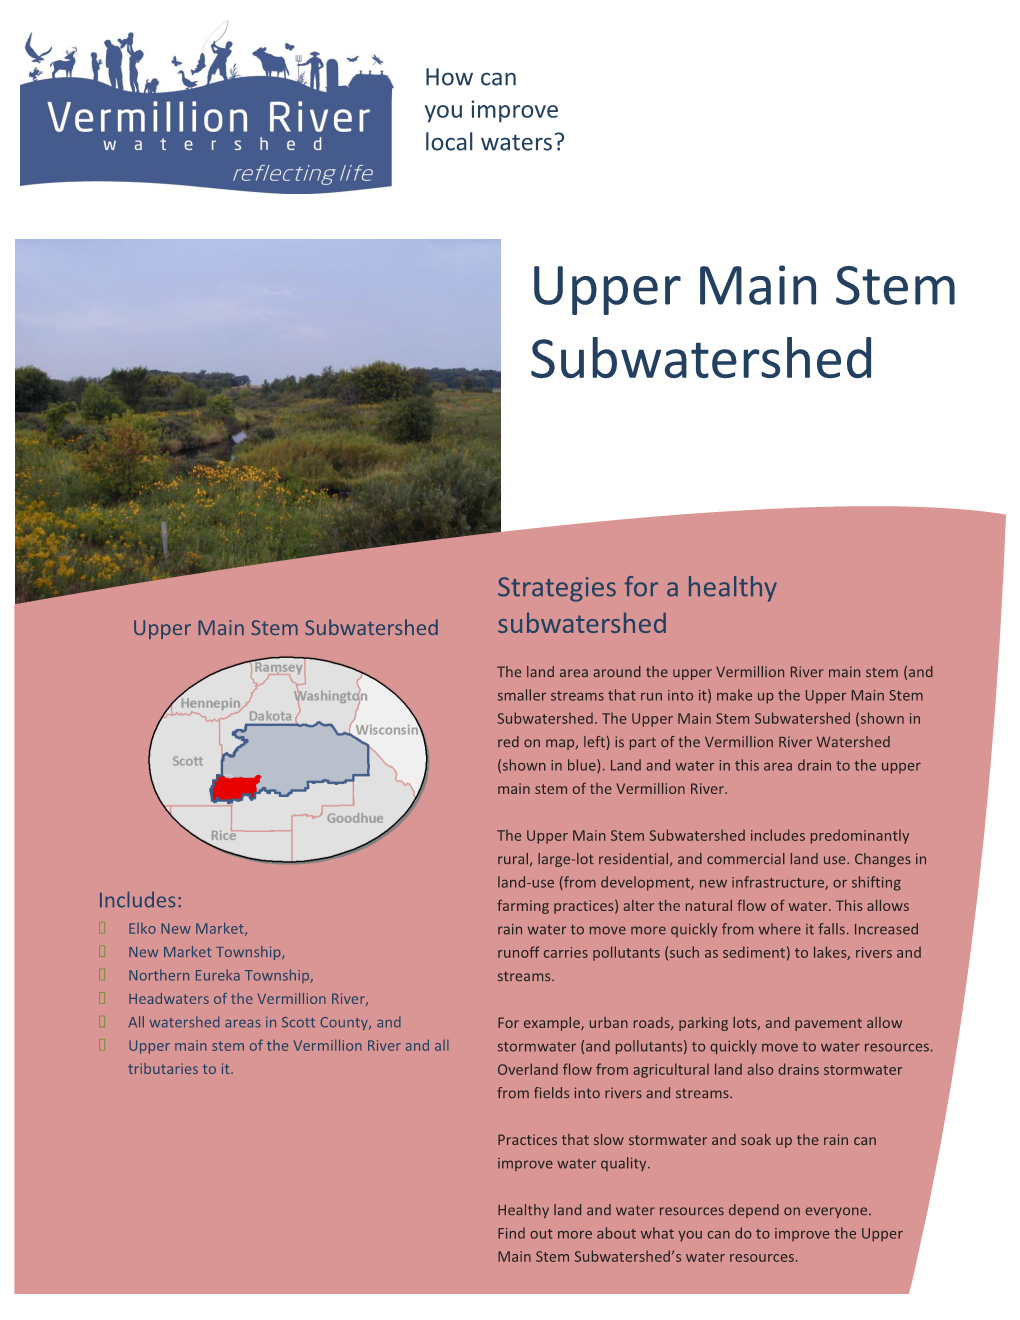 Upper Main Stem Subwatershed